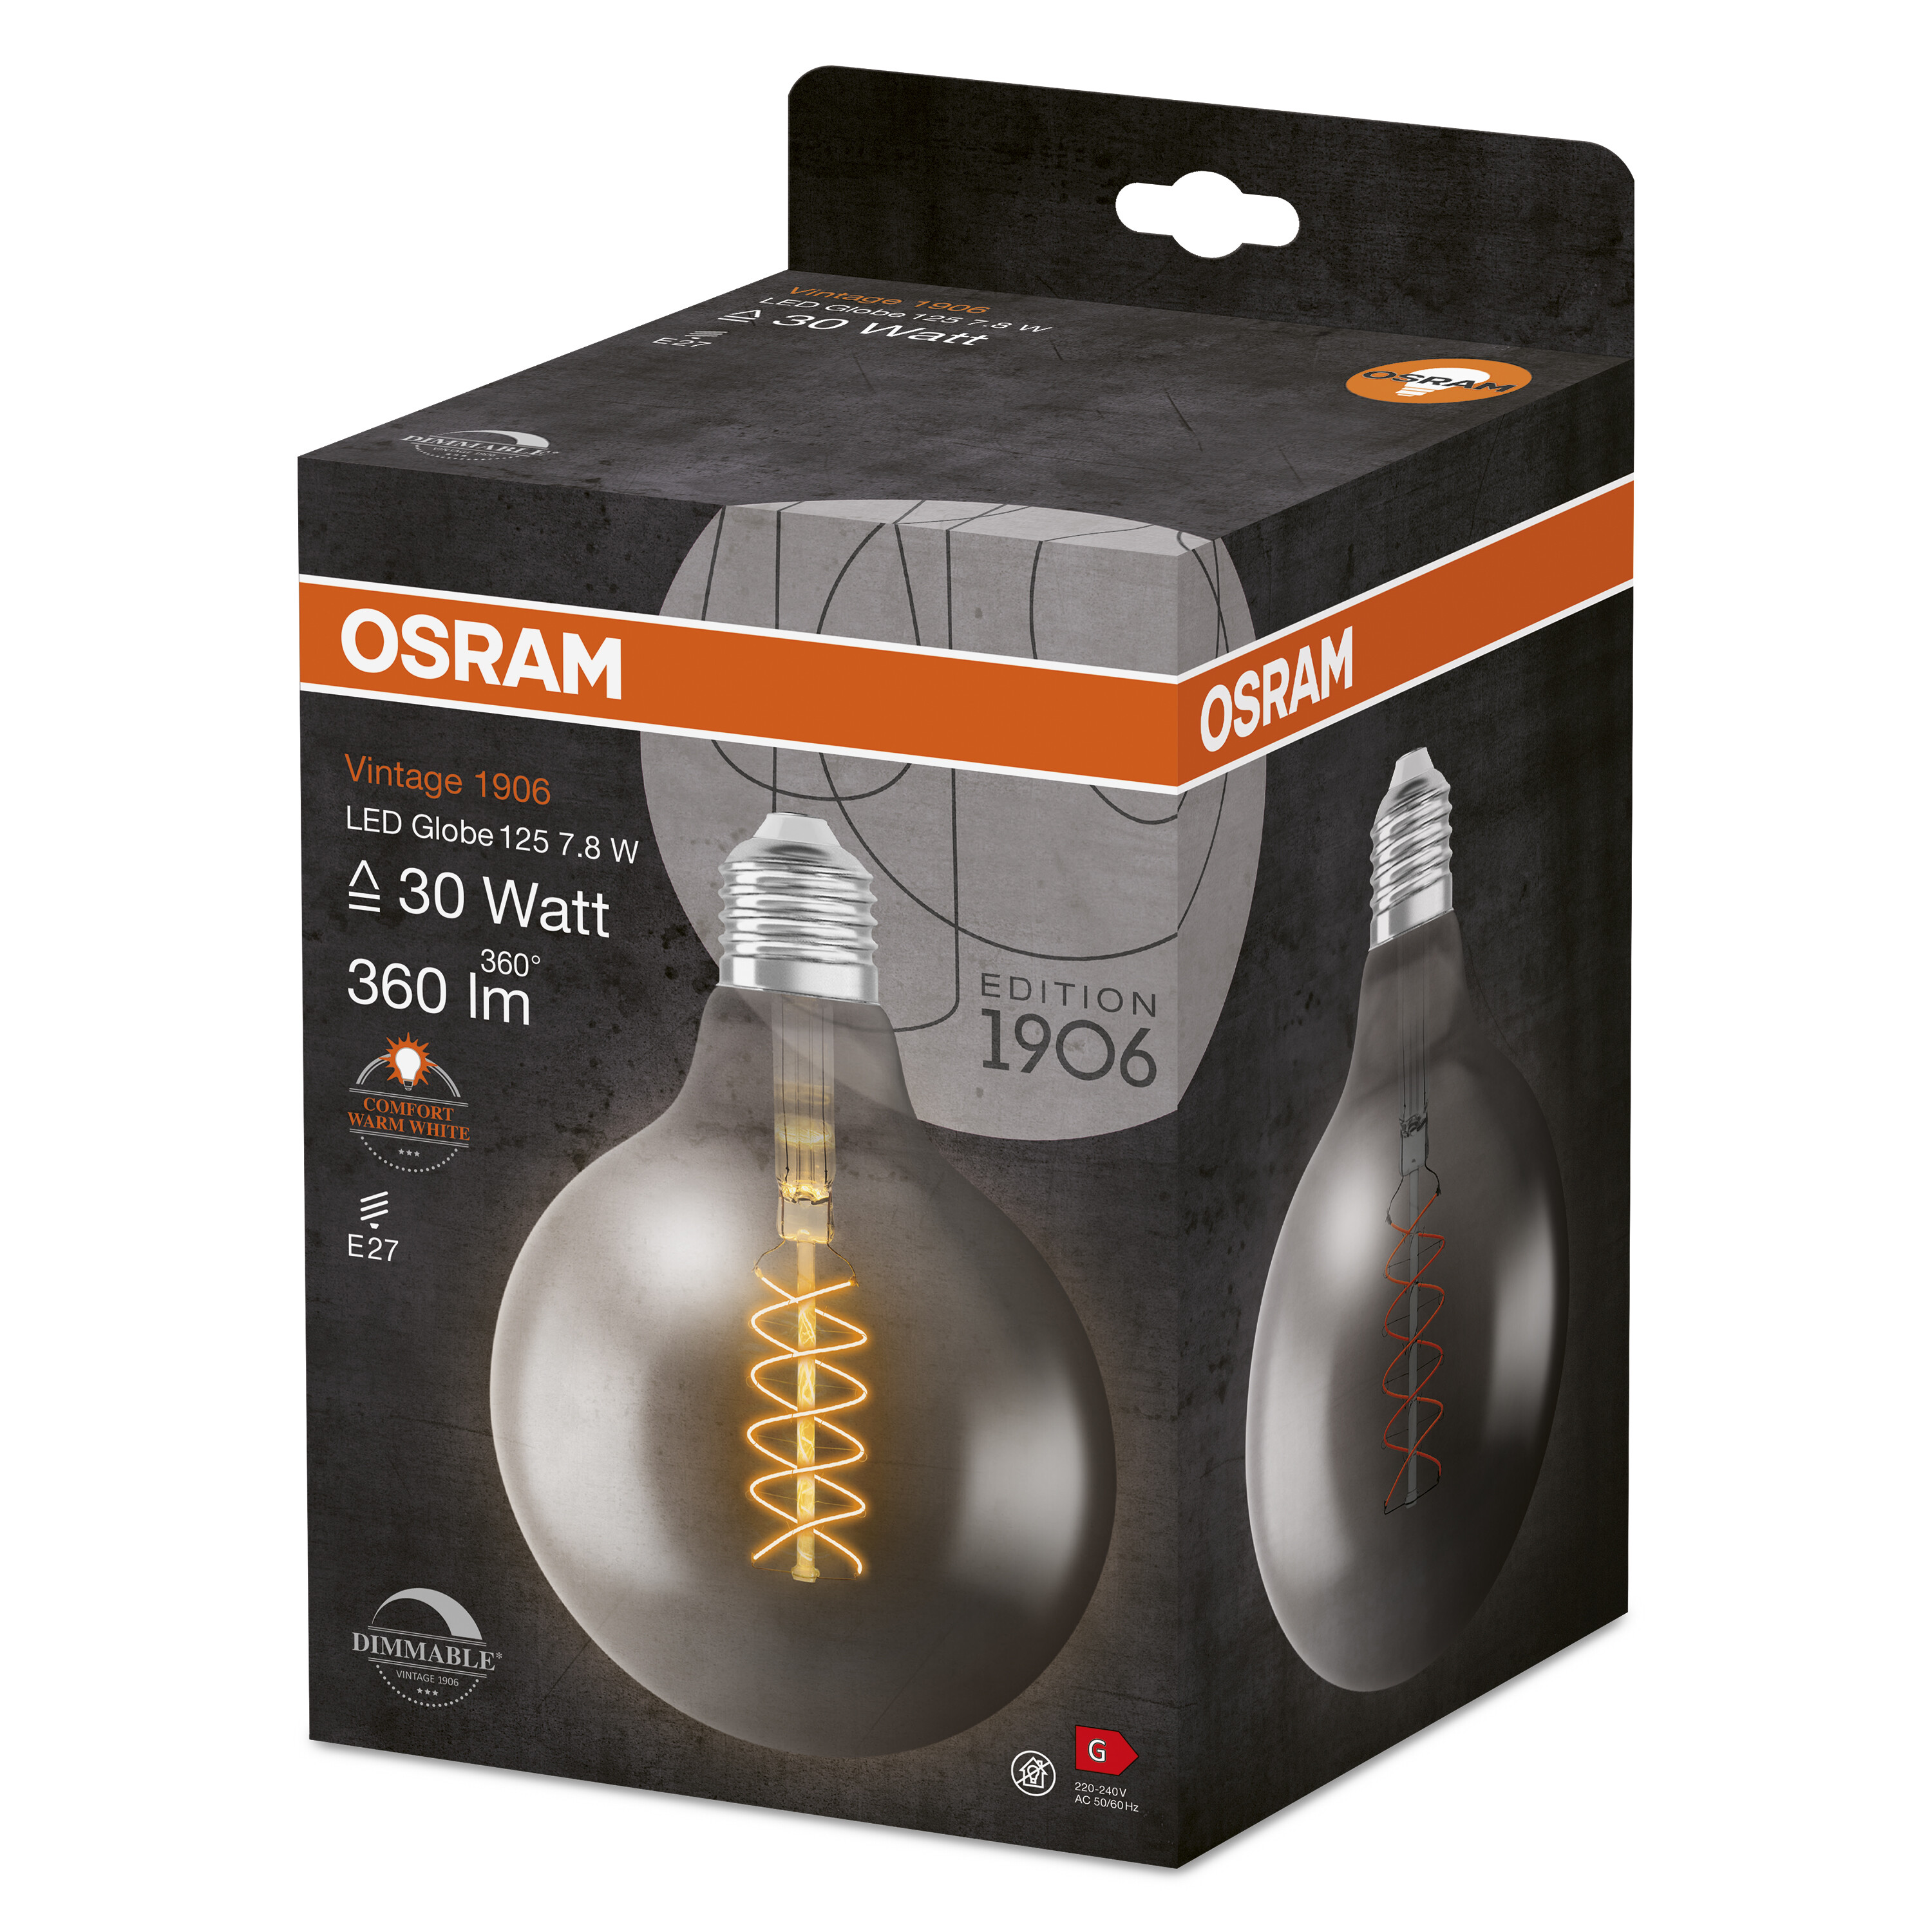 OSRAM  Vintage 360 Lumen Lampe DIM 1906 Warmweiß LED LED